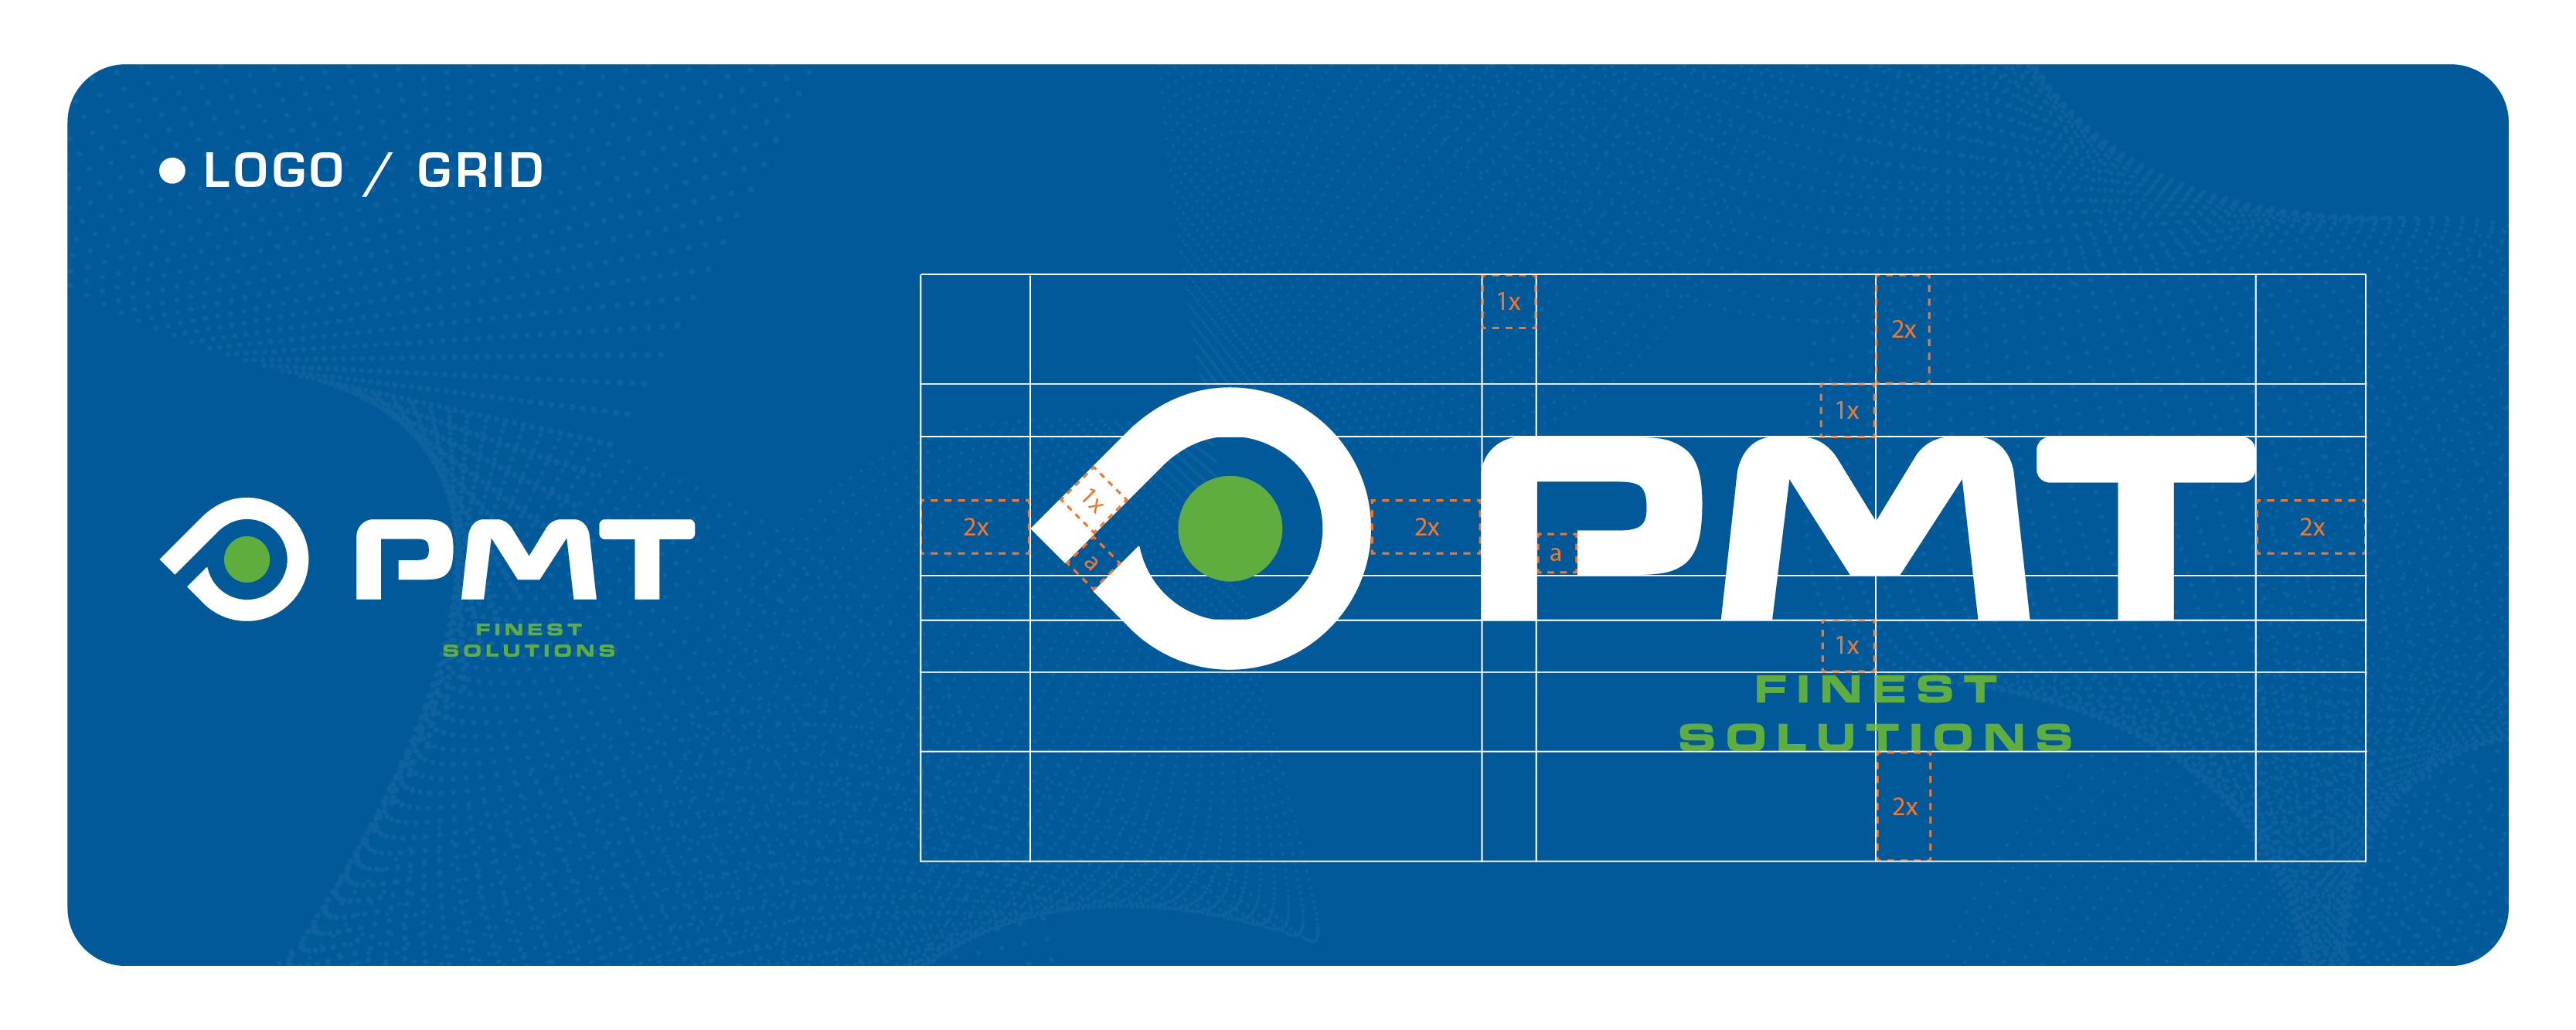 The PMT solutions logo design.